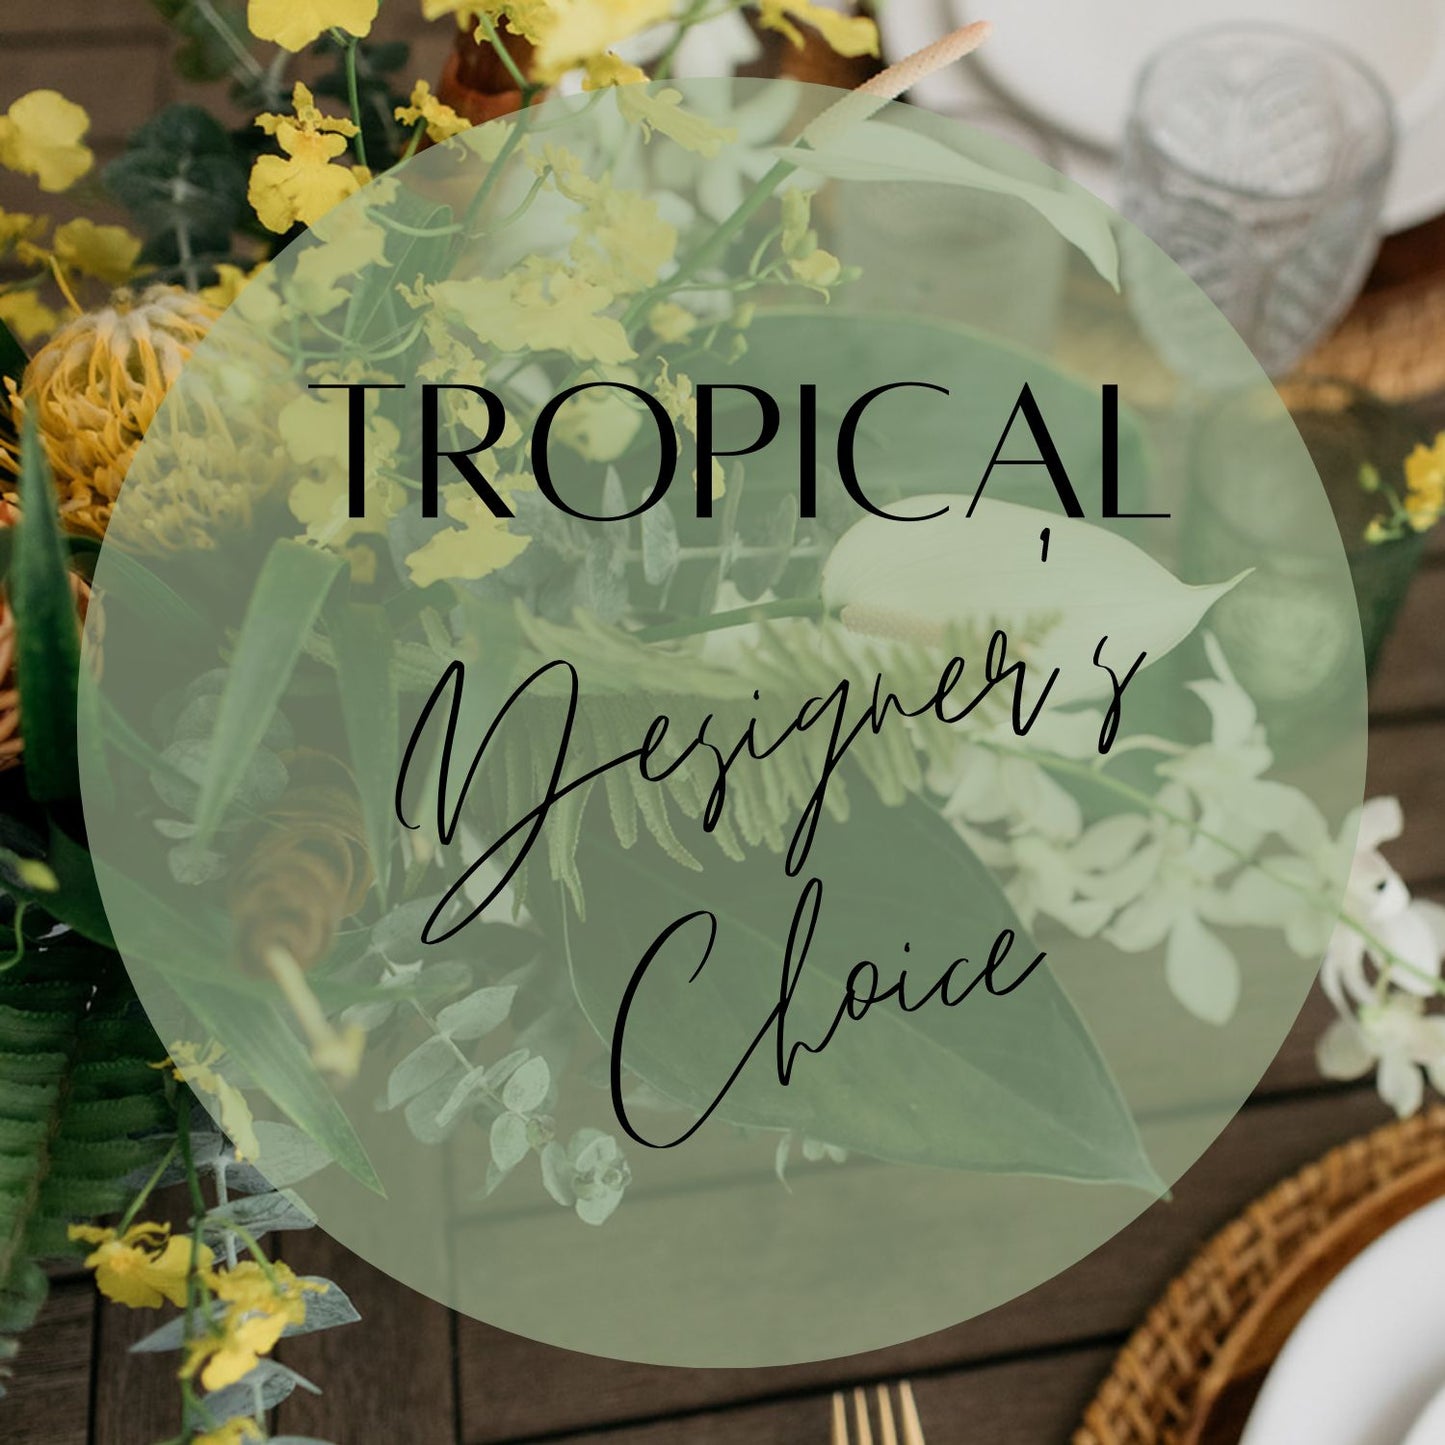 Tropical  Designer's Choice Arrangement